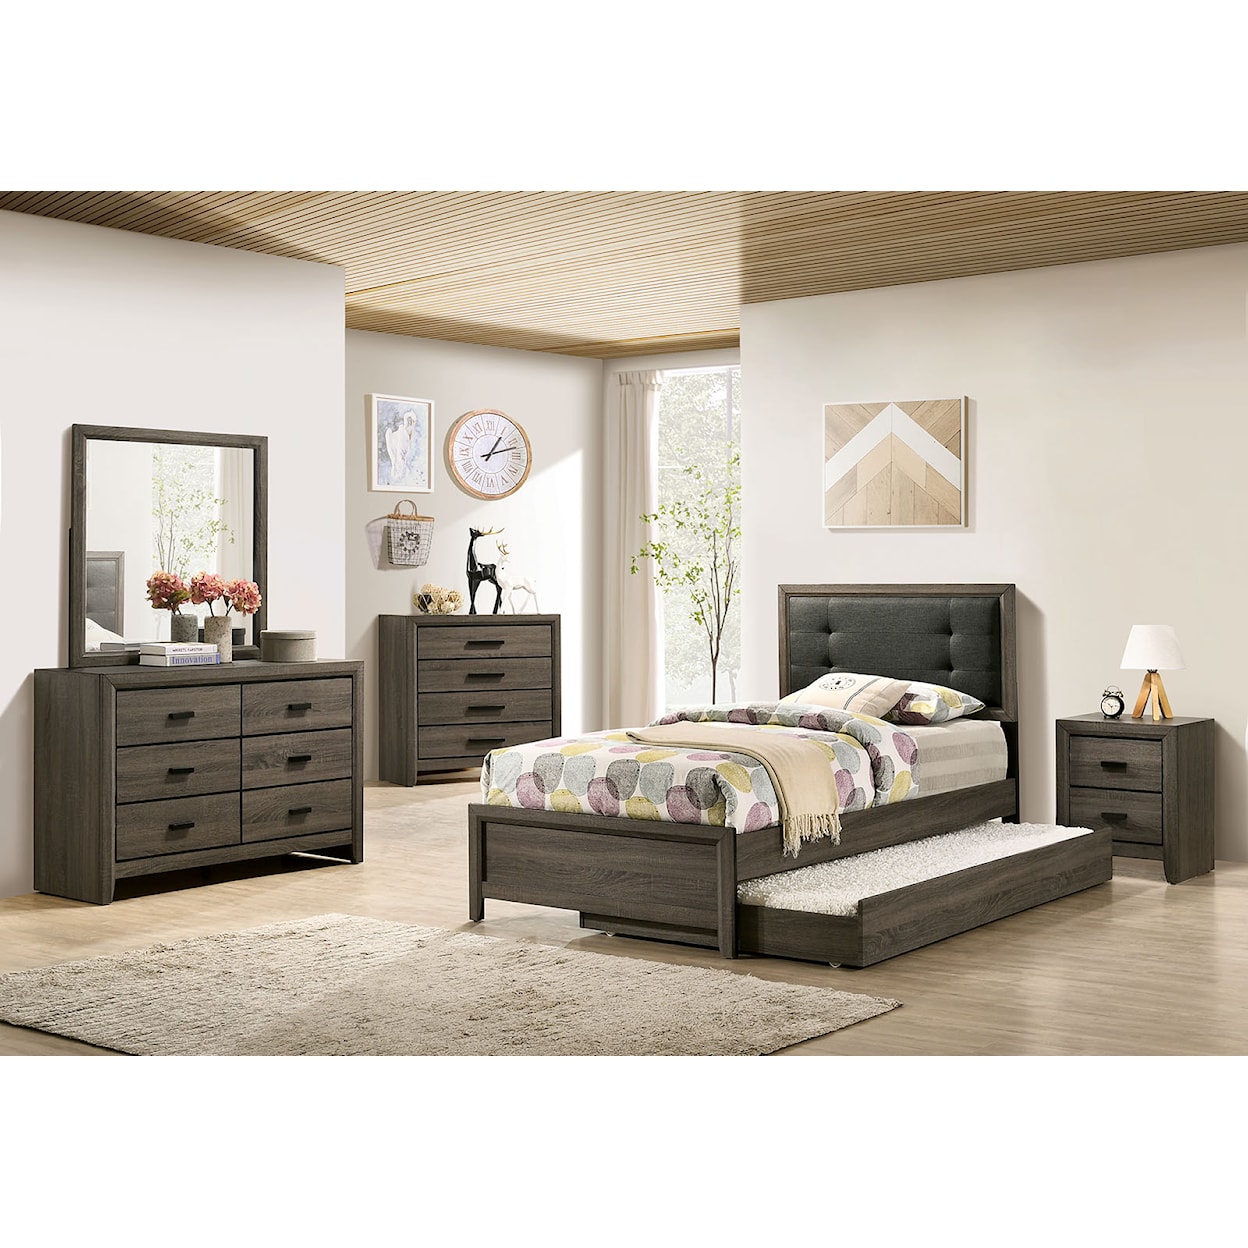 Furniture of America Roanne 4 Pc. Full Bedroom Set